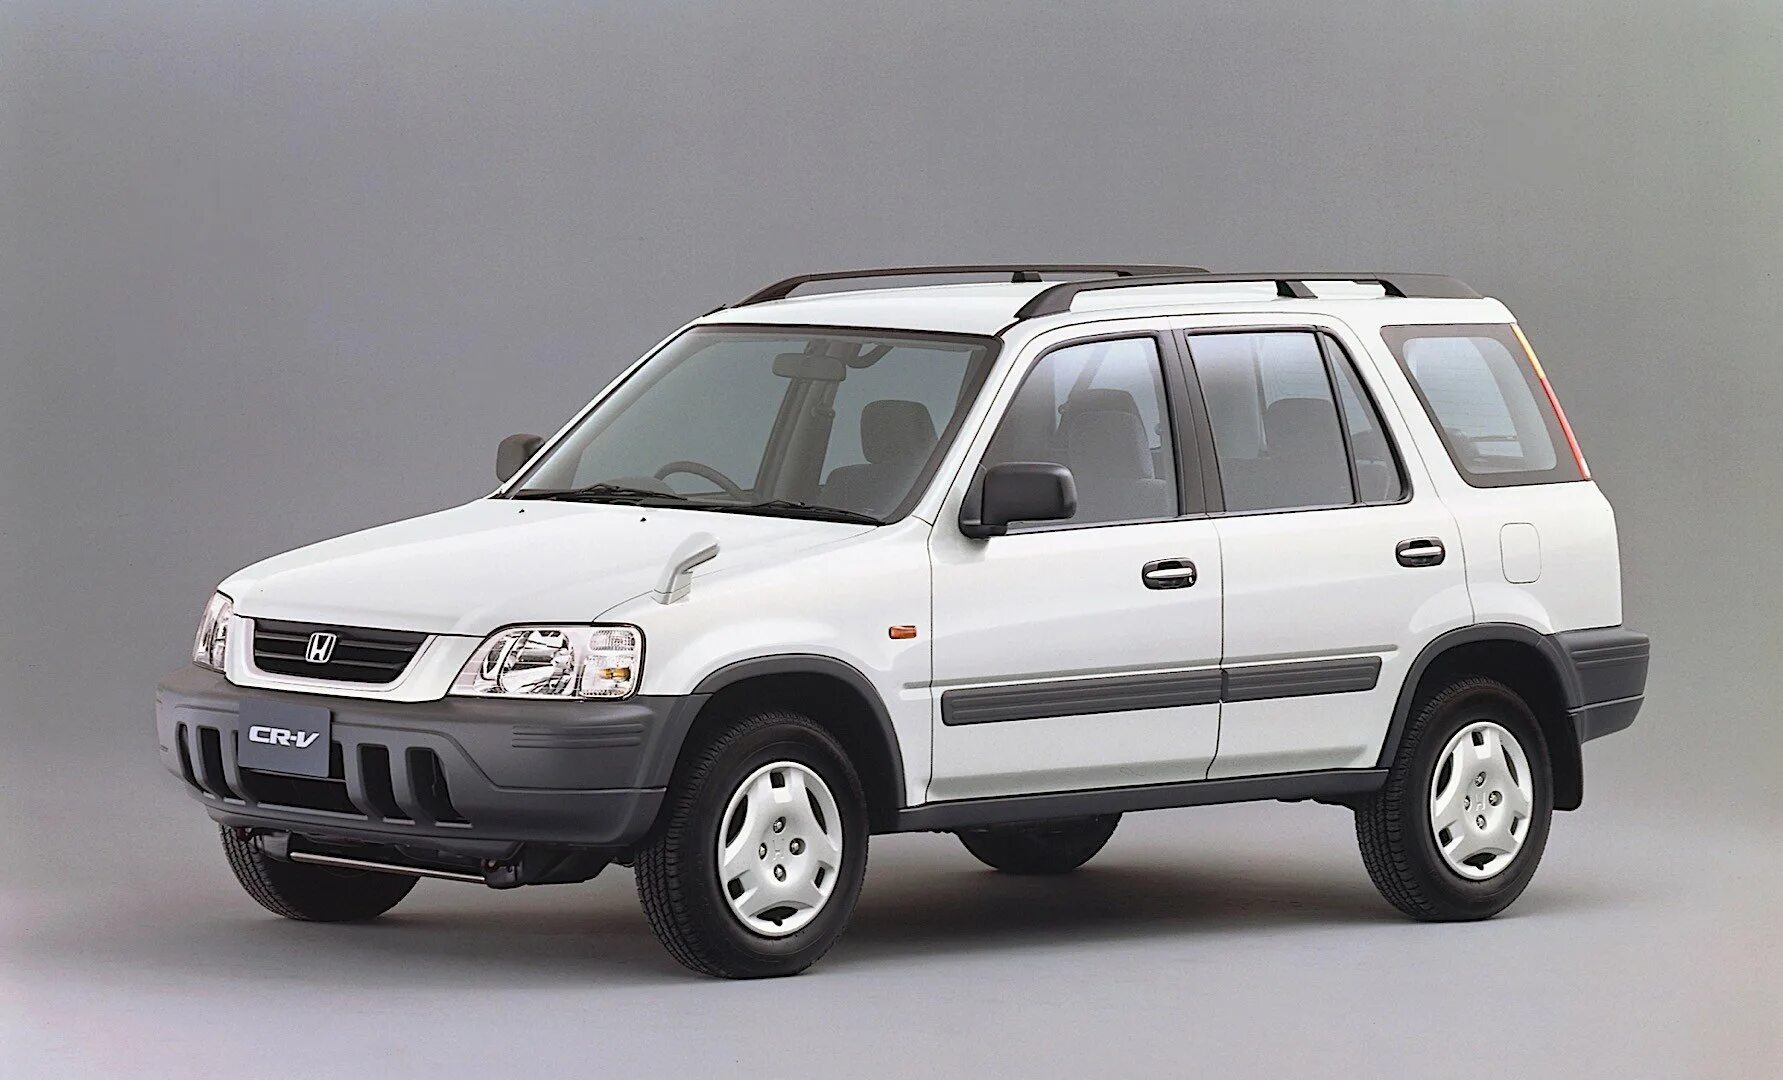 Хонда црв 98 года. Honda CRV 1998. Хонда CRV 1996. Honda CRV 1995. Honda CR-V 1998.